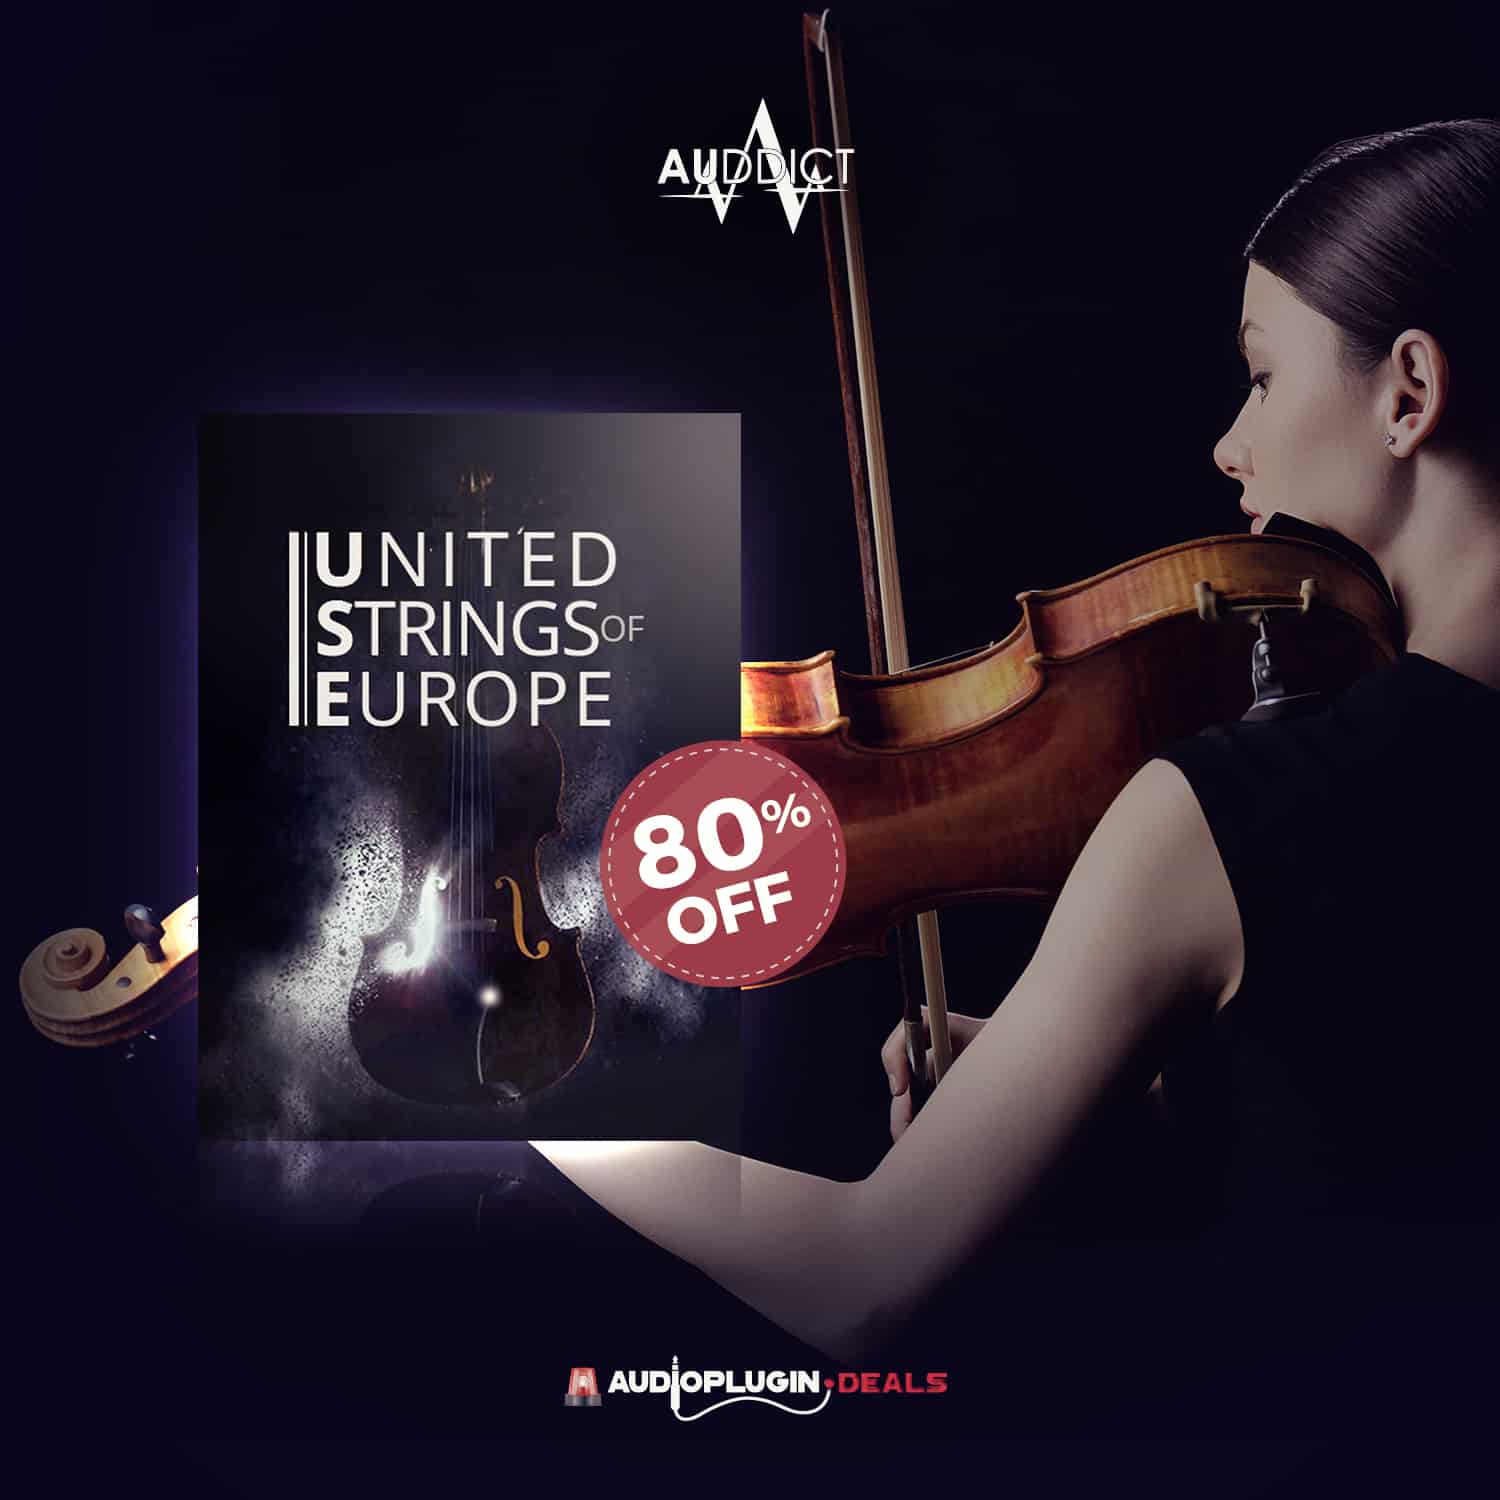 United-Strings-Of-Europe-Facebook-ad-2